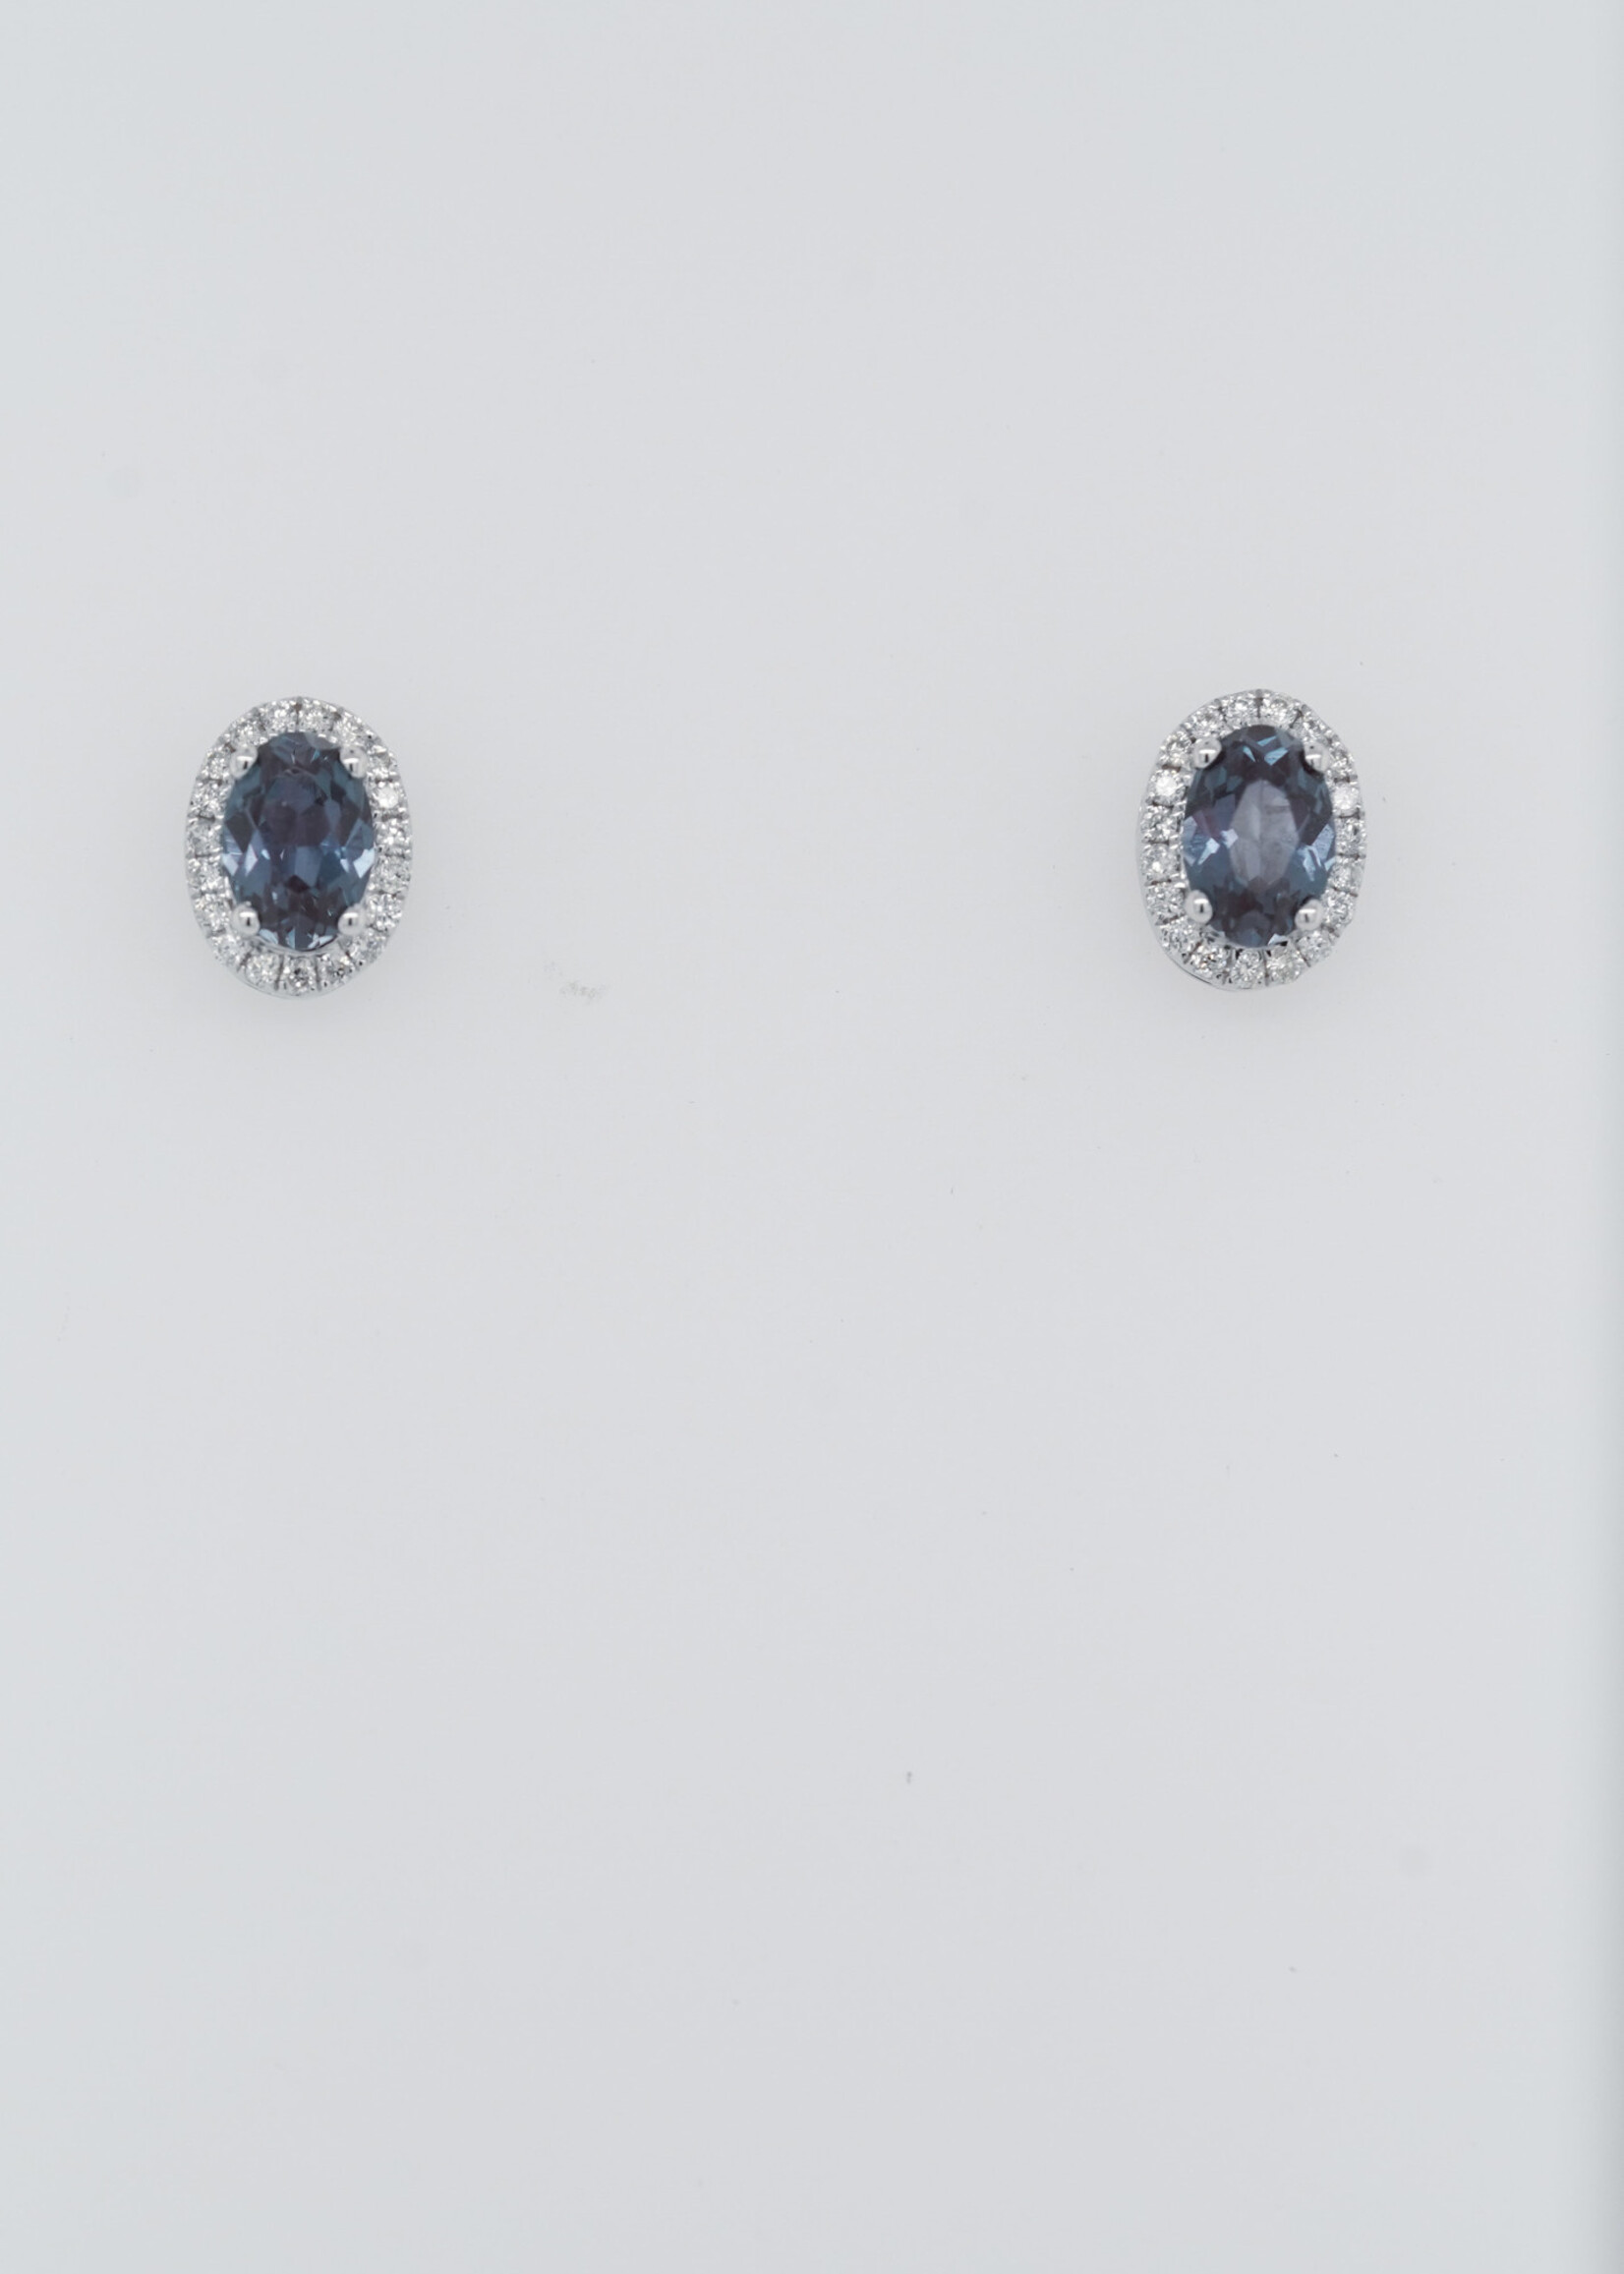 14KW 2.12g 1.35ctw Created Alexandrite & Diamond Halo Stud Earrings